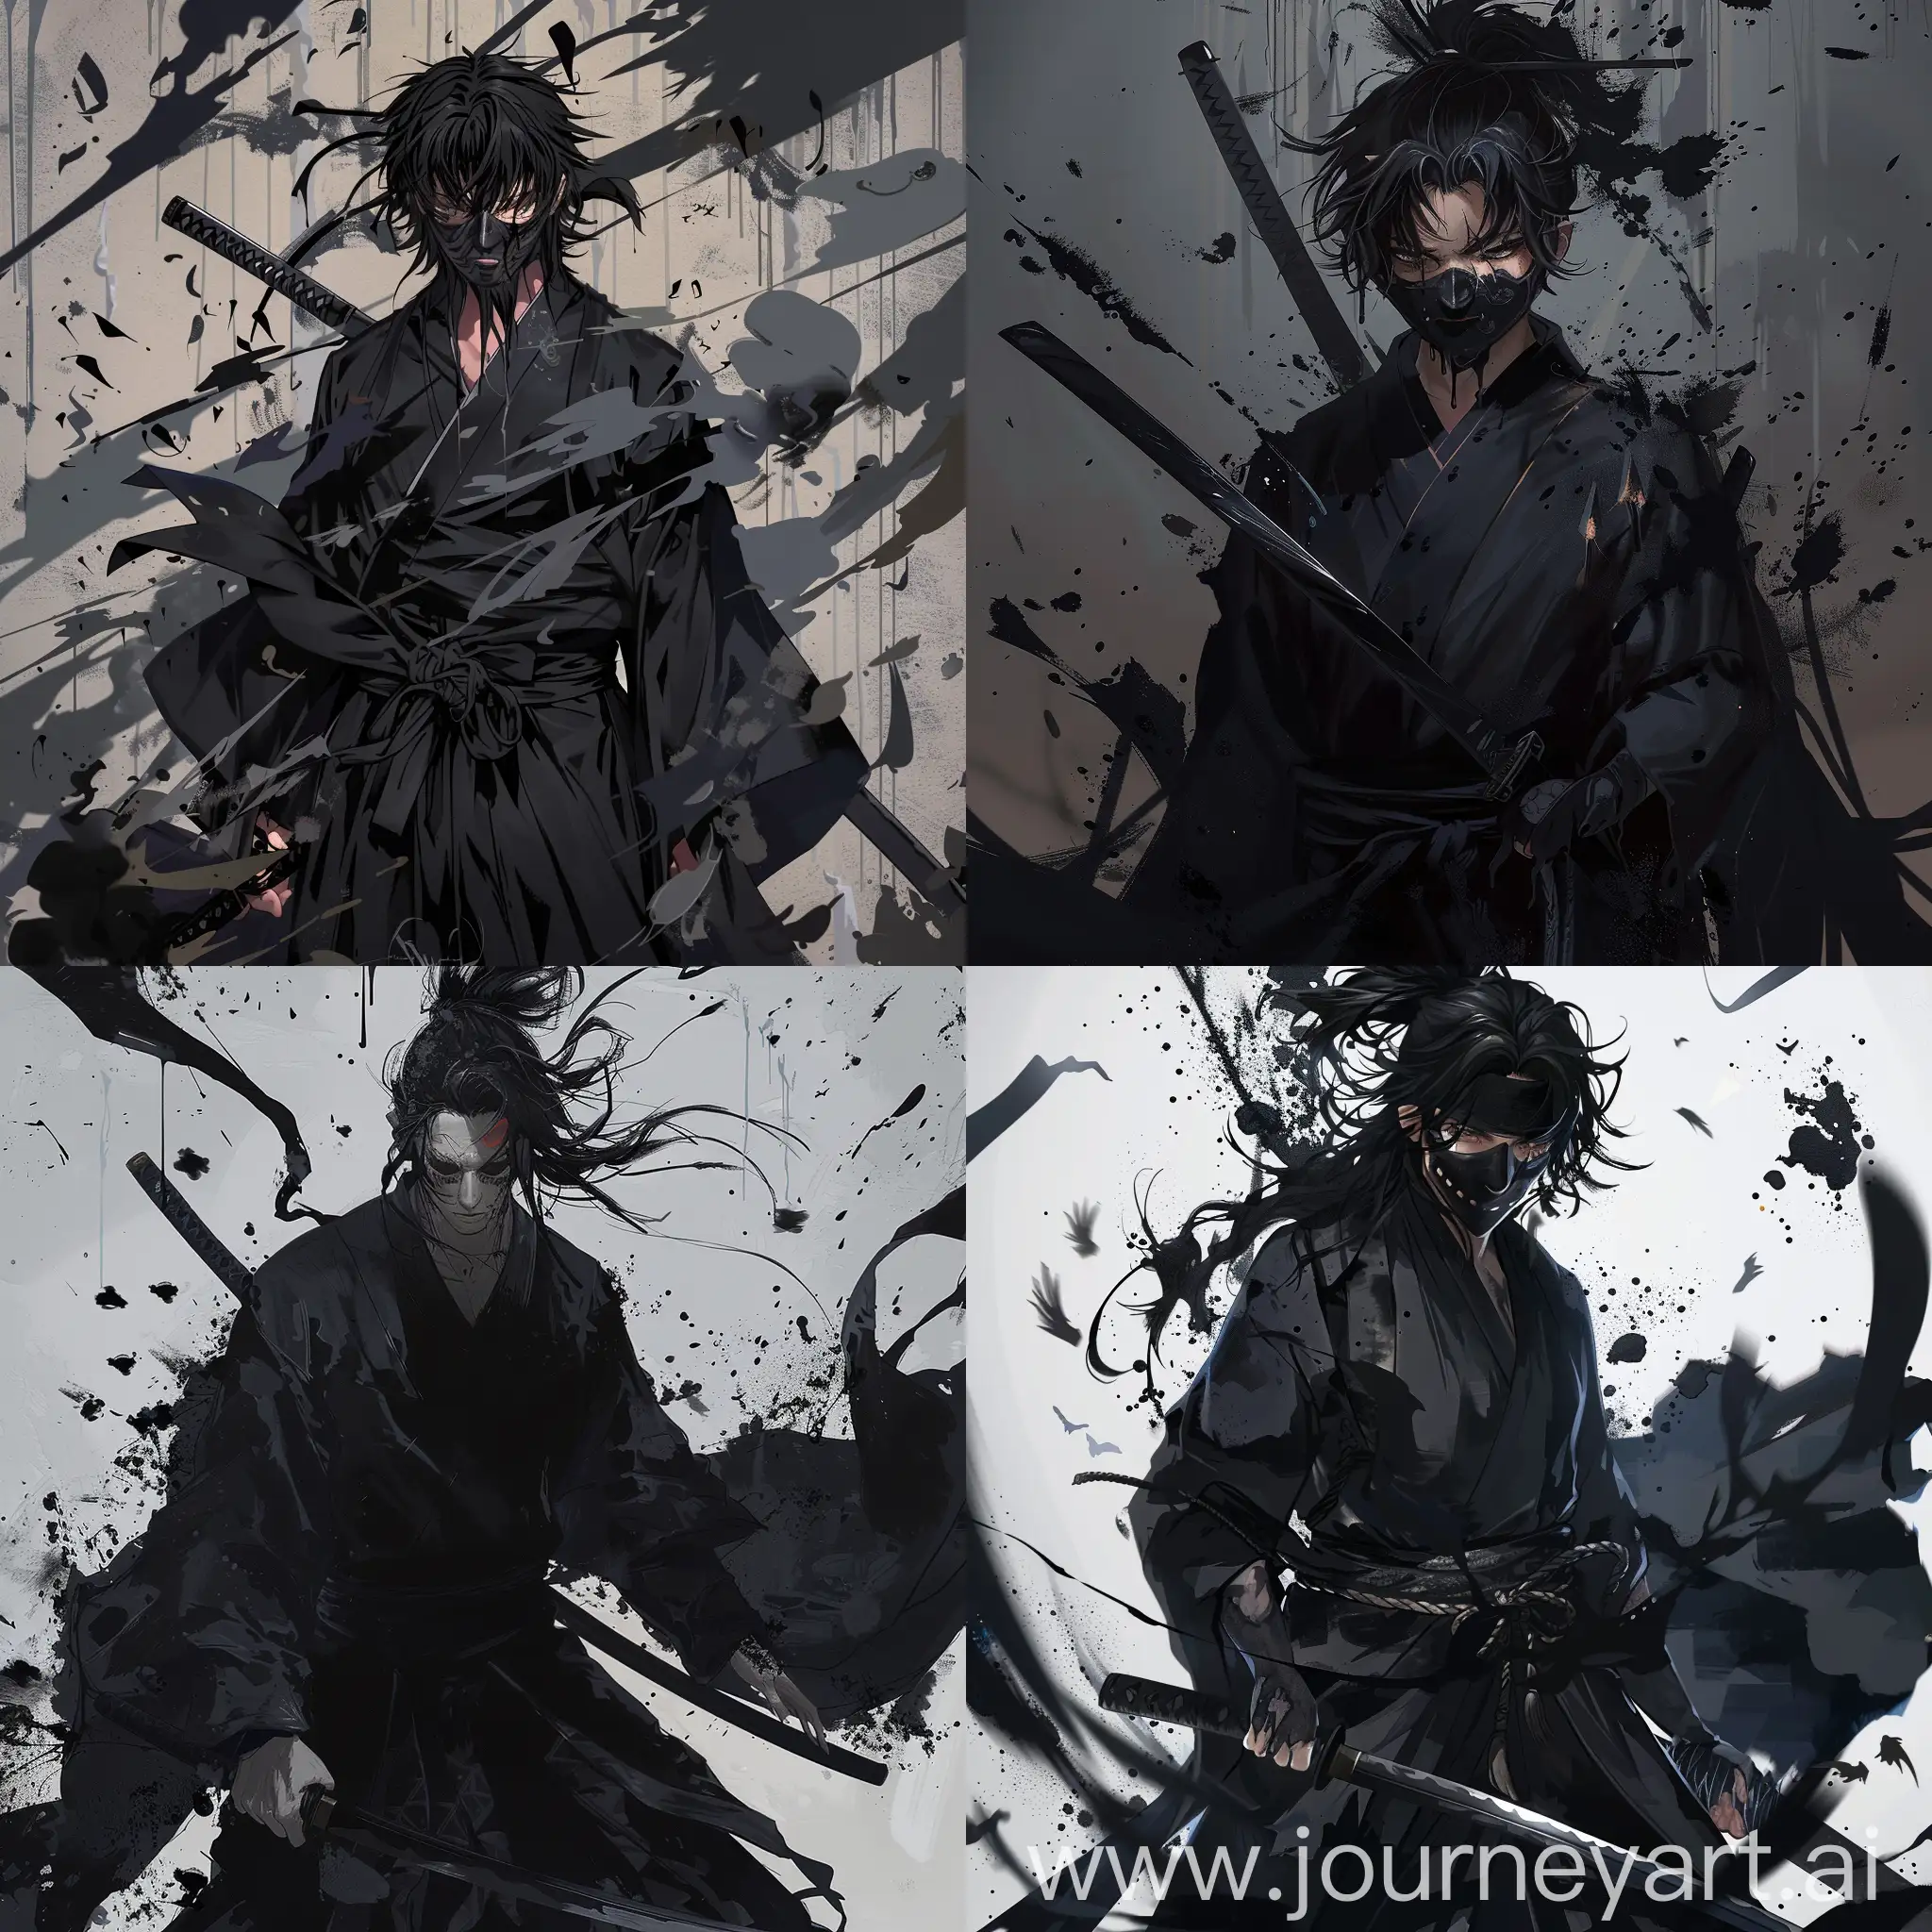 Brooding-Samurai-with-Oni-Mask-and-Shadowy-Aura